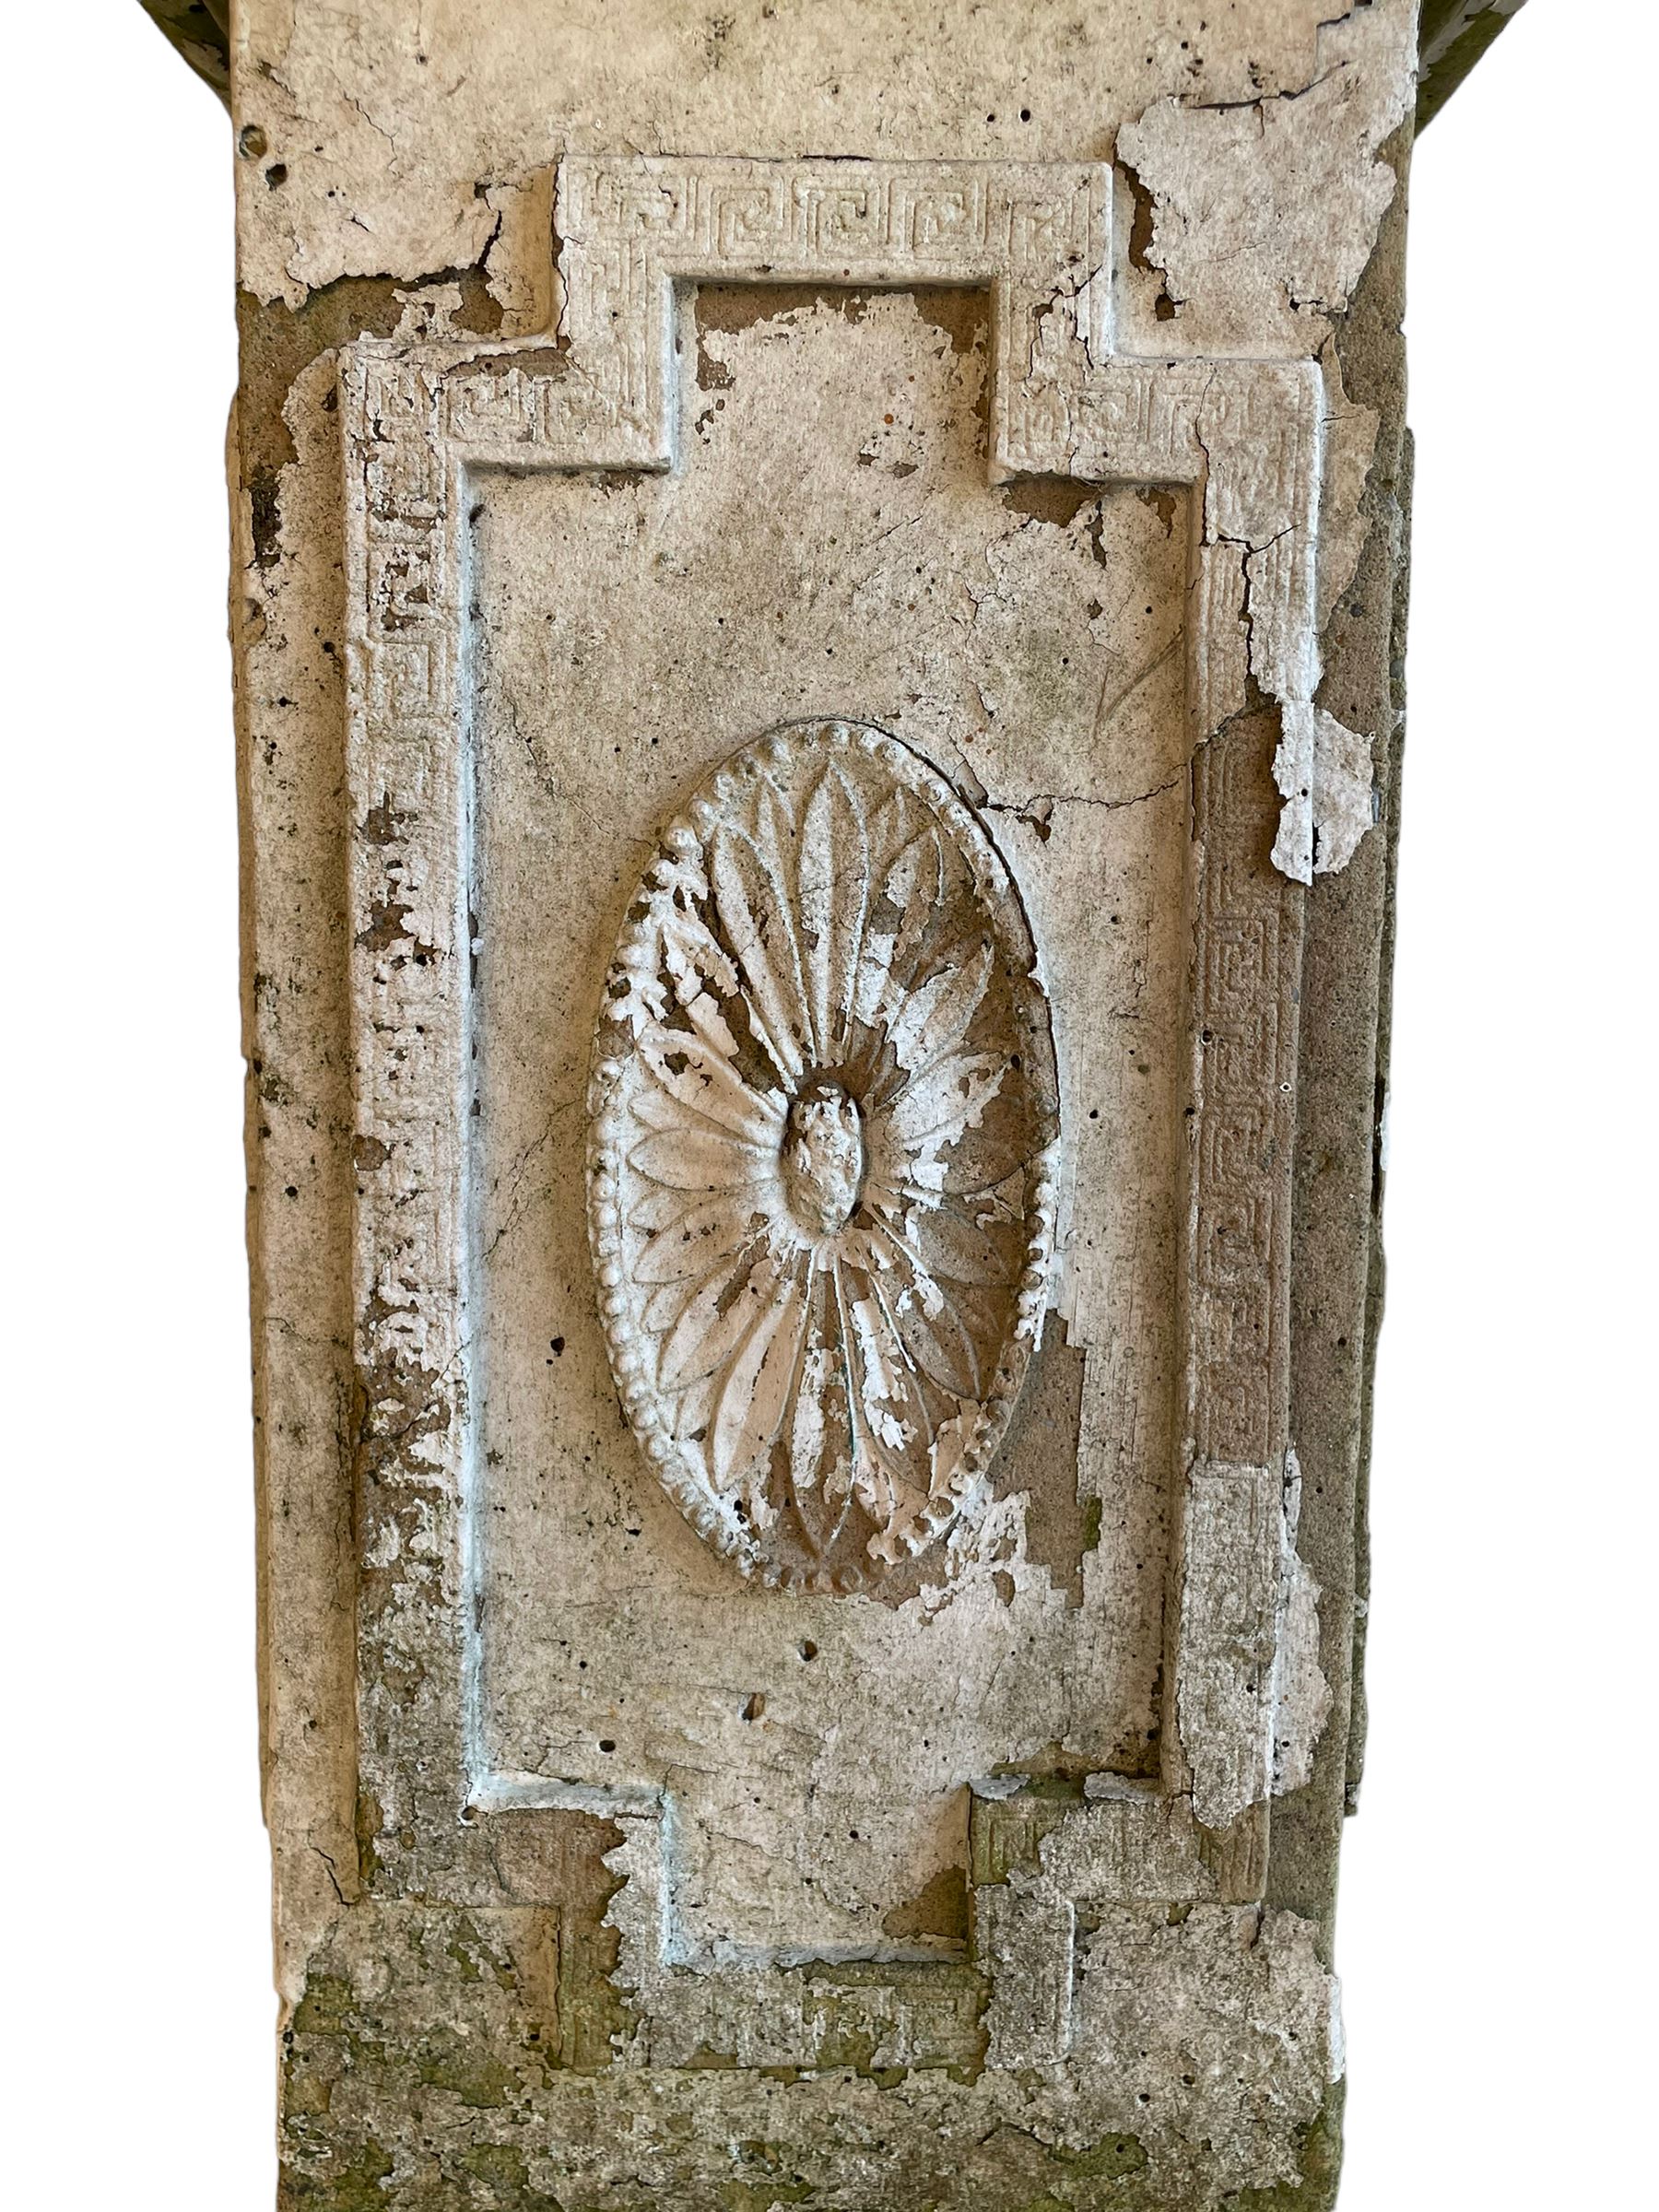 20th century cast stone two-piece garden figure in the form of Venus de Milo or Aphrodite of Melos - Image 10 of 13